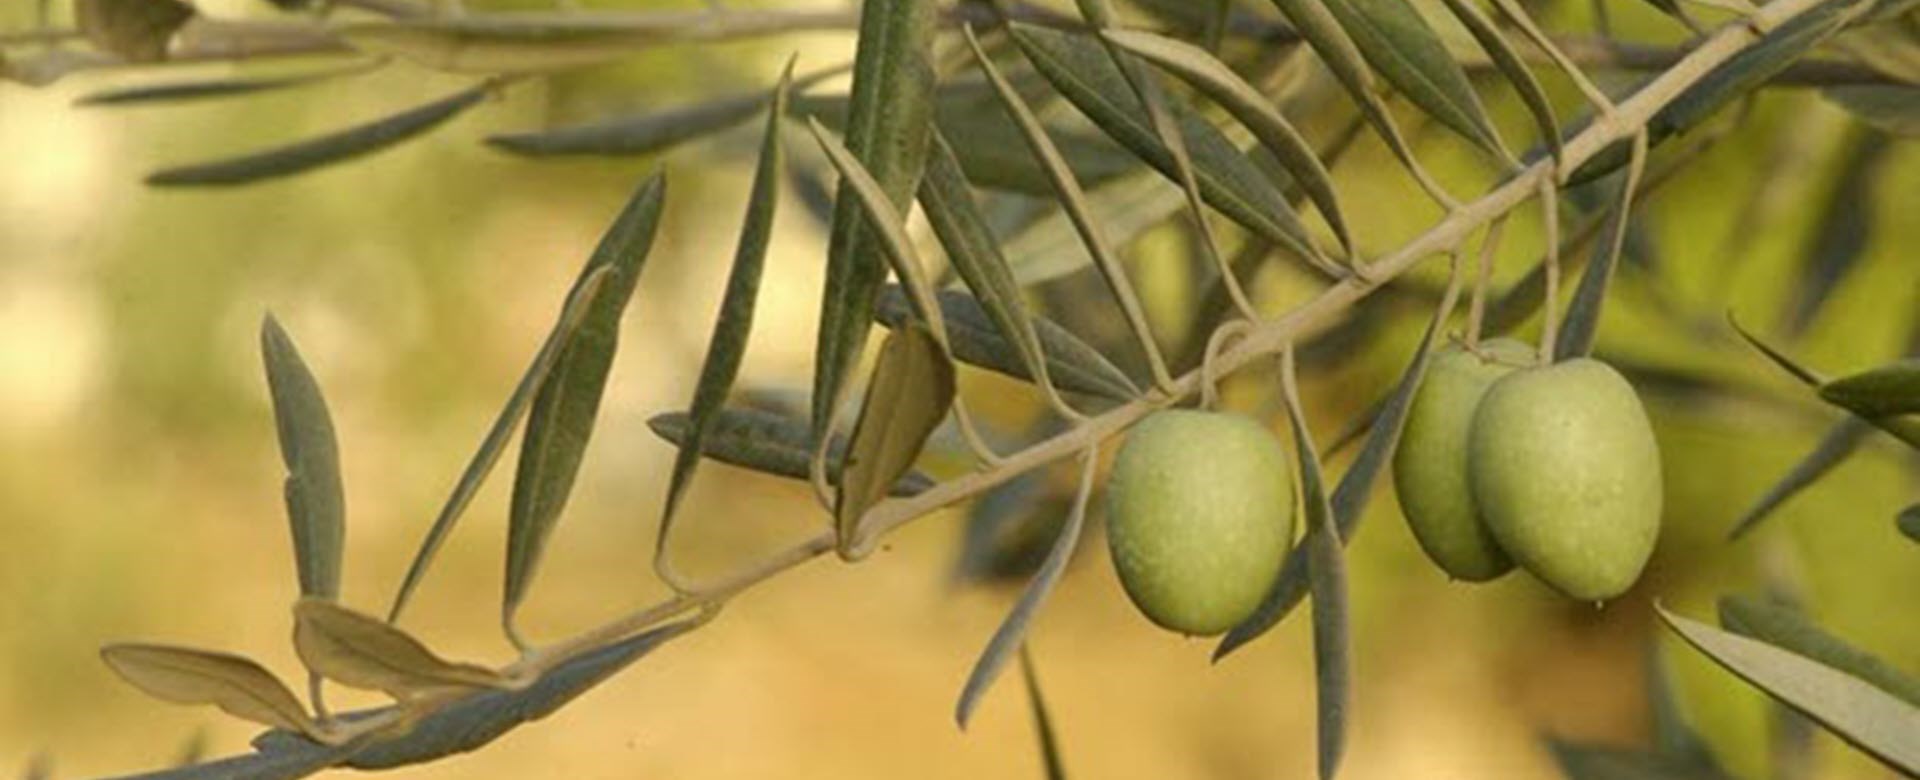 The “Olive Tree” Treatment